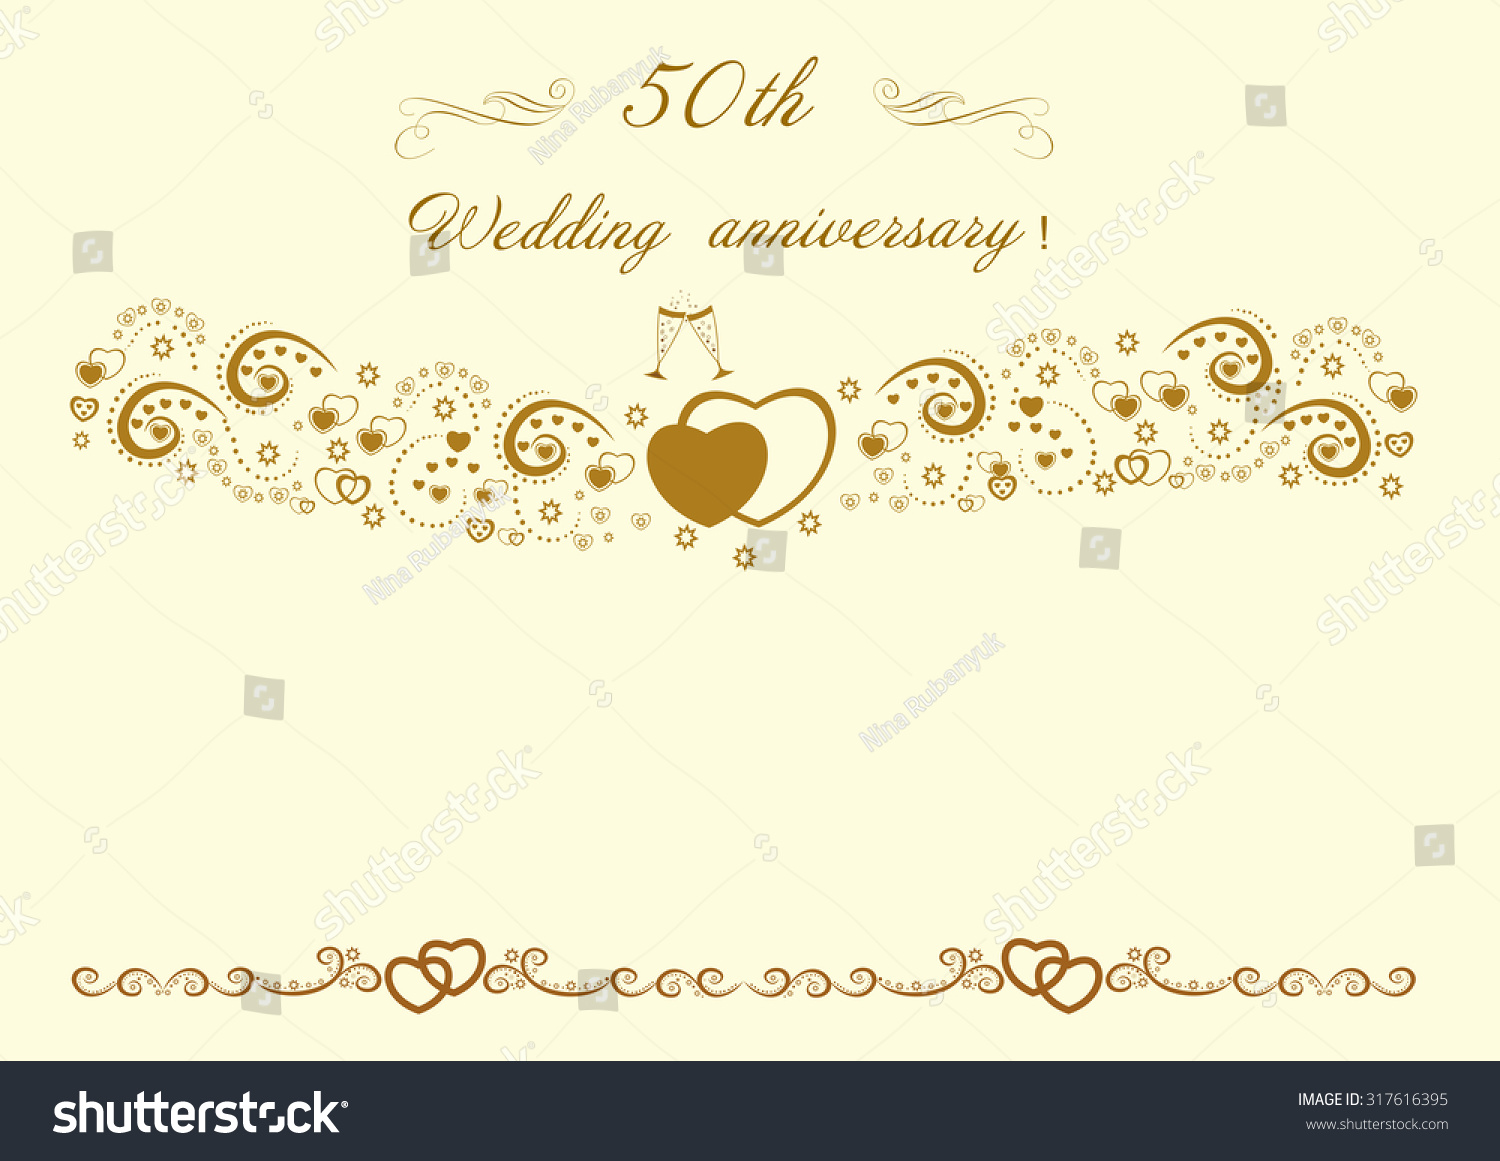 SVG of 50th Wedding anniversary Invitation.Beautiful editable vector illustration svg